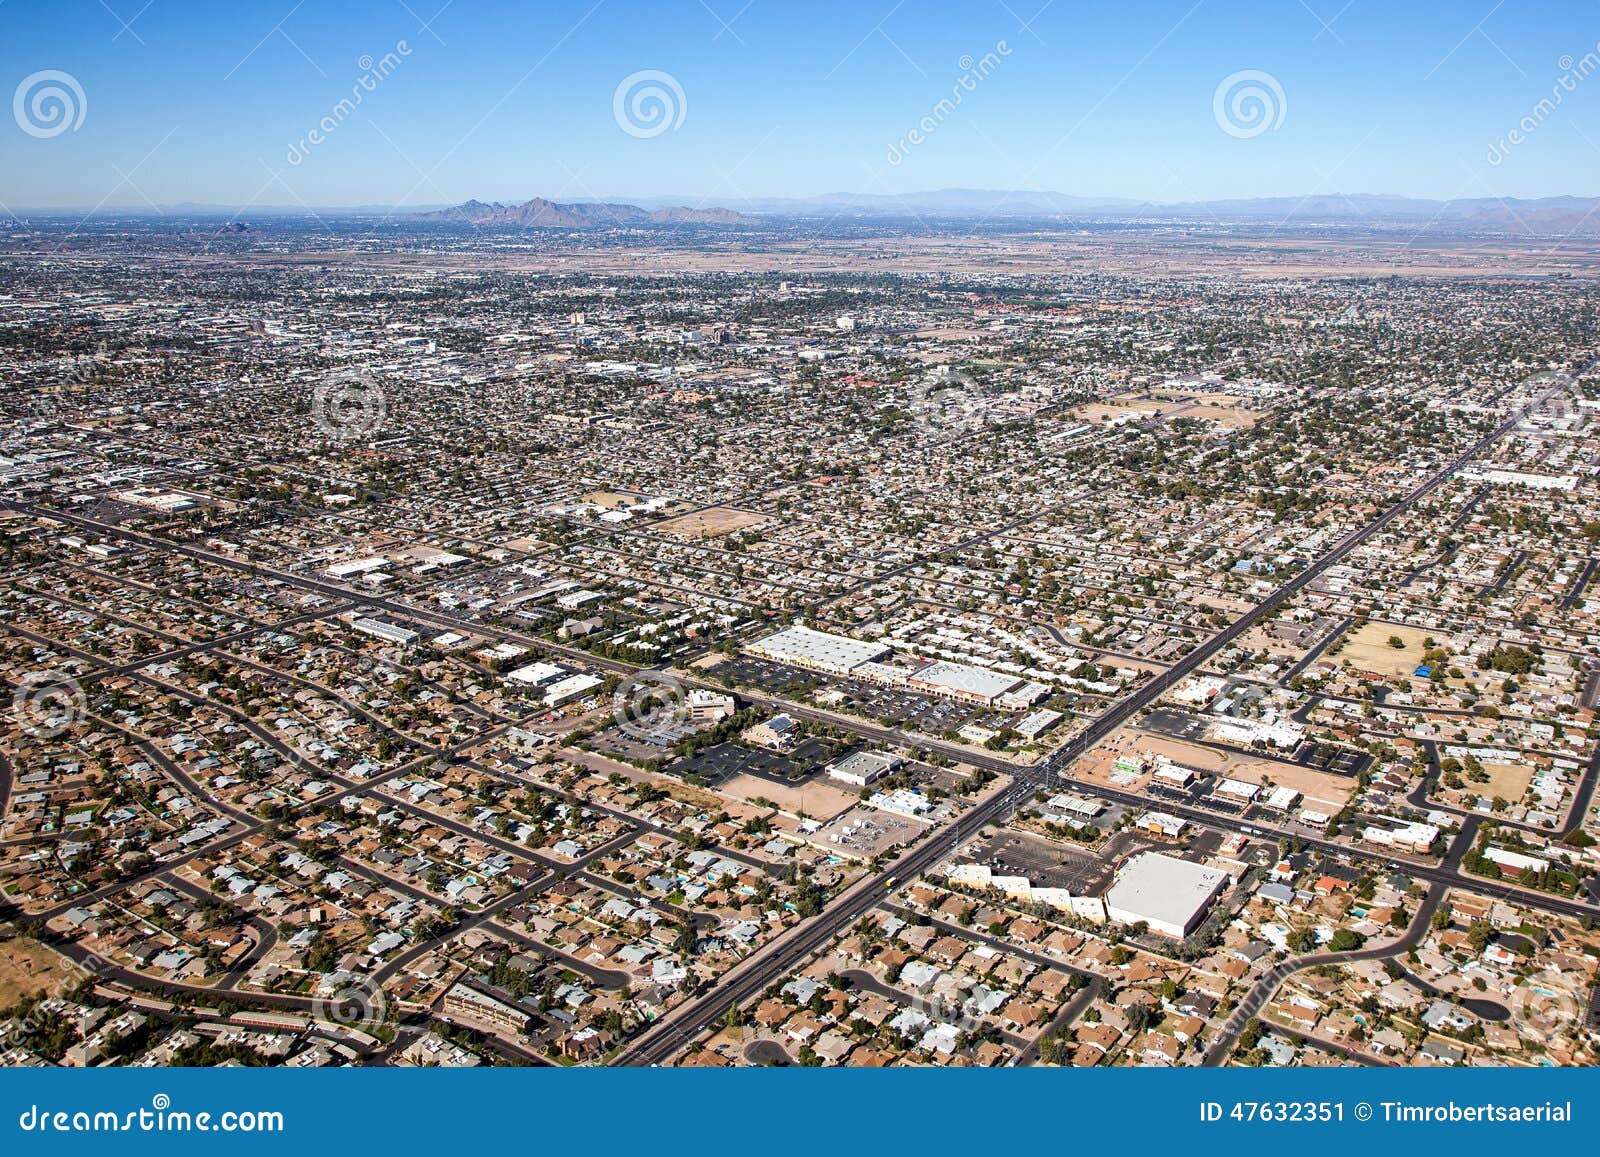 mesa, arizona skyline